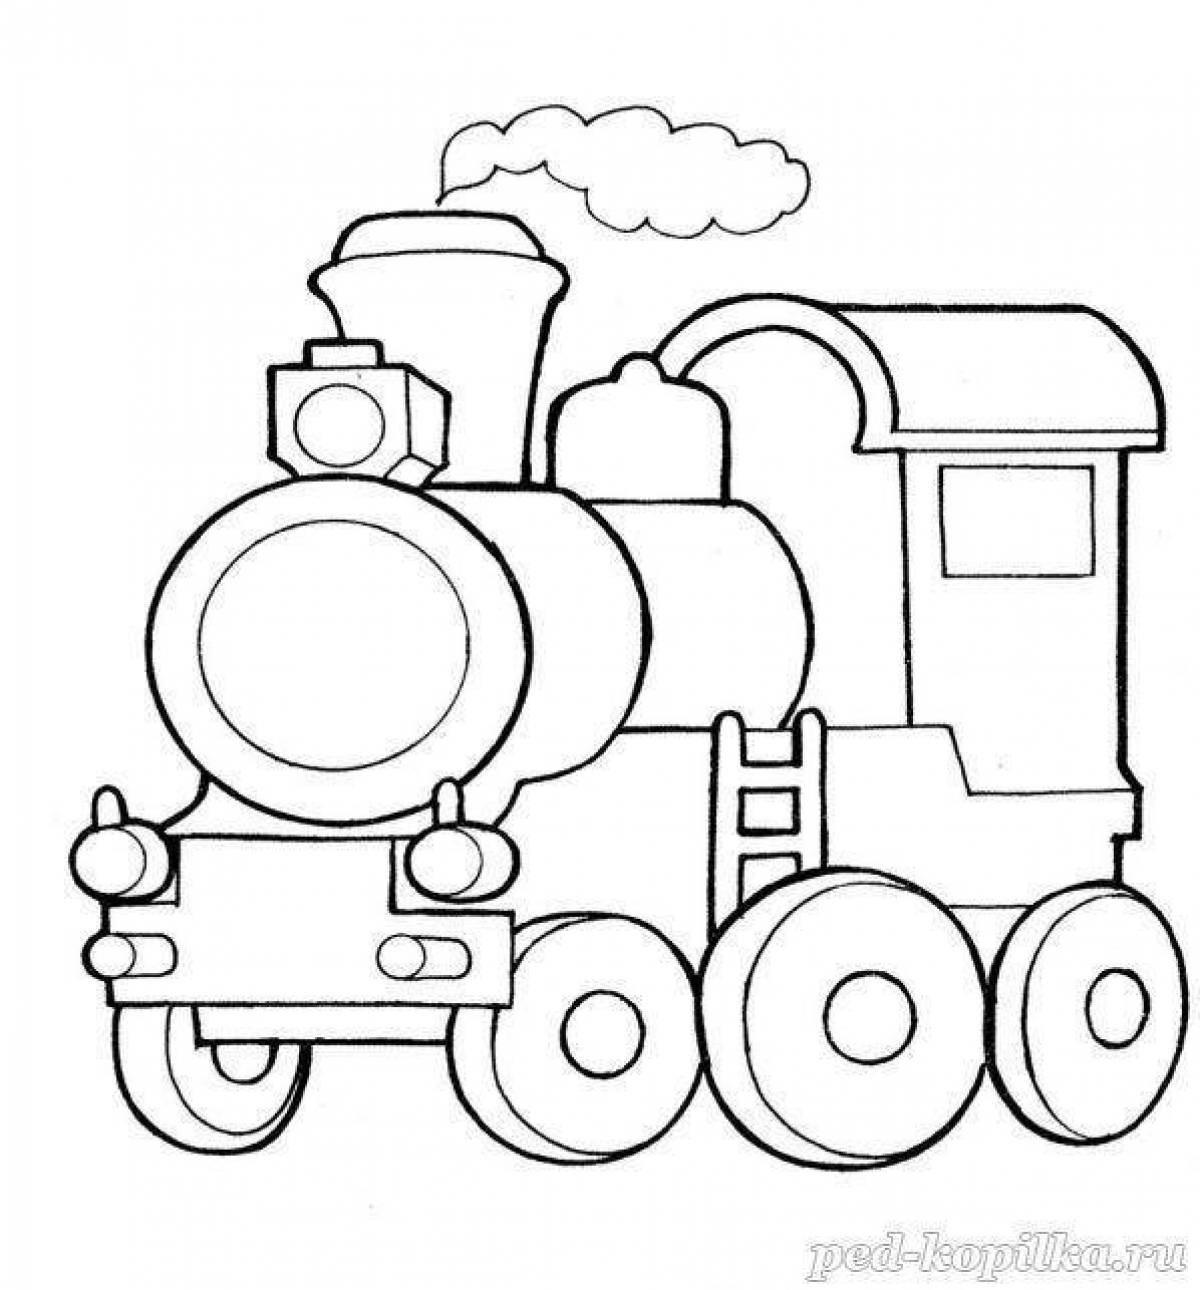 Steam locomotive for kids #10